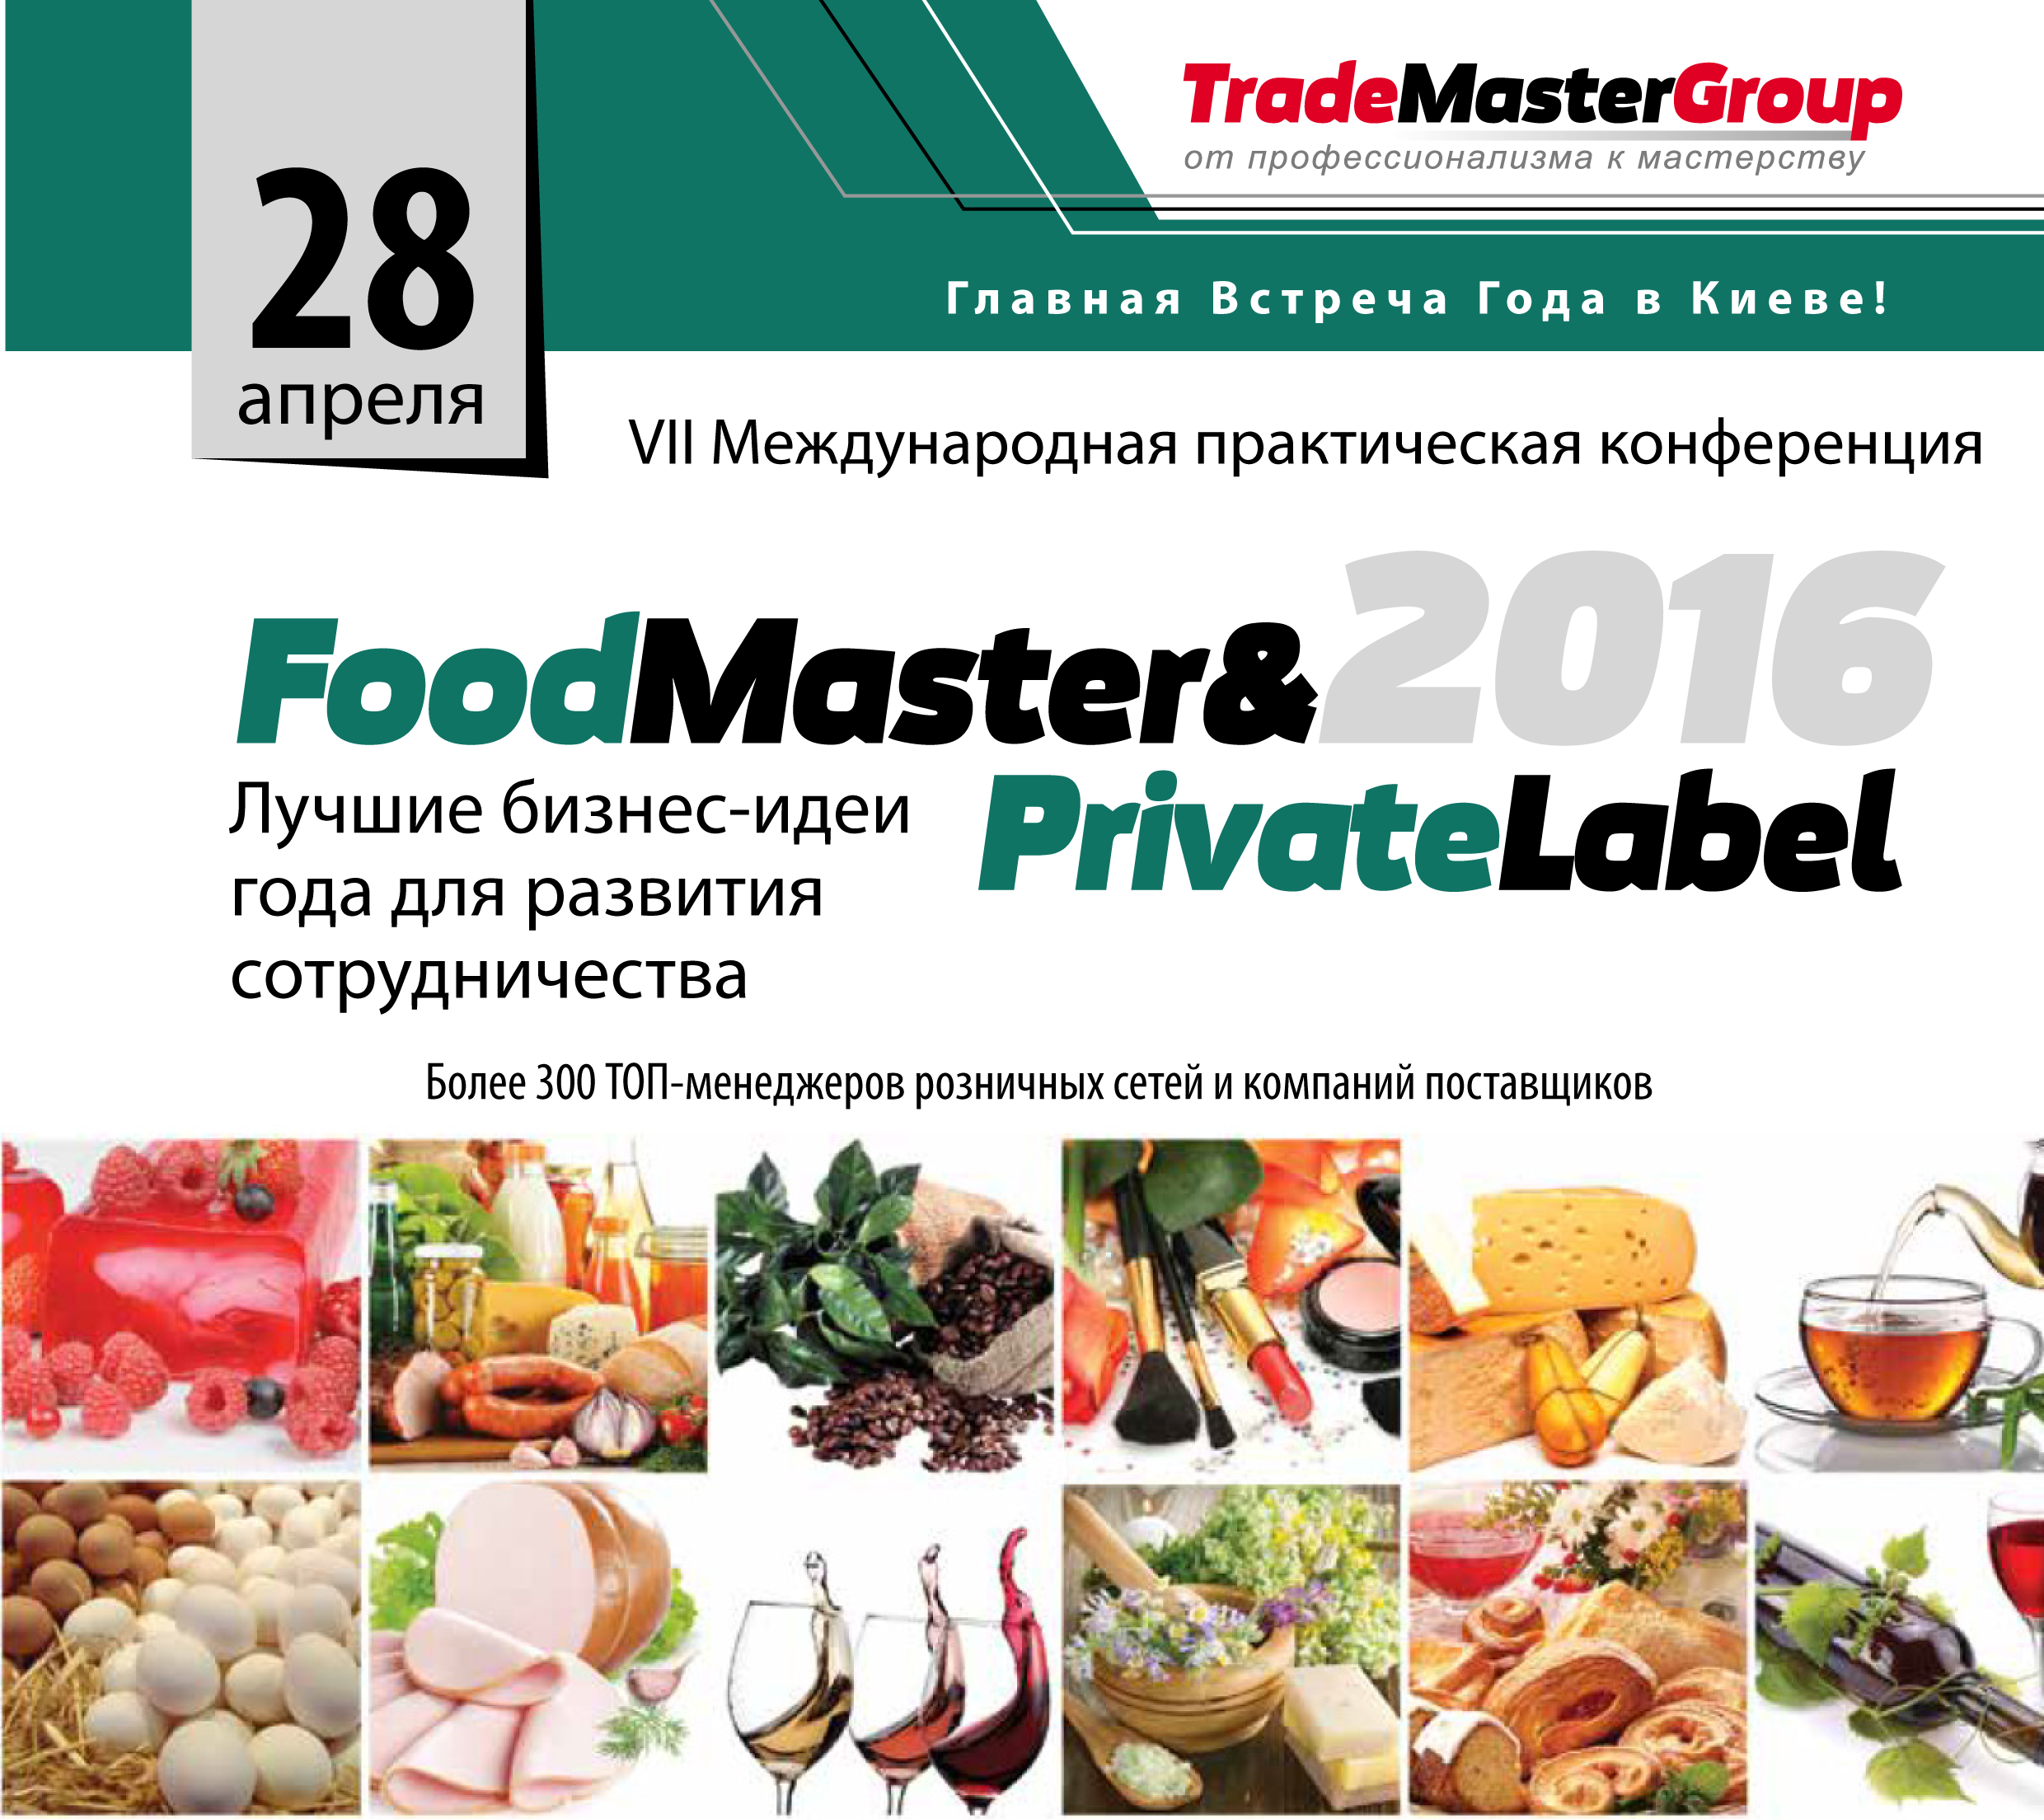 FoodMaster&PrivateLabel-2016:  -    